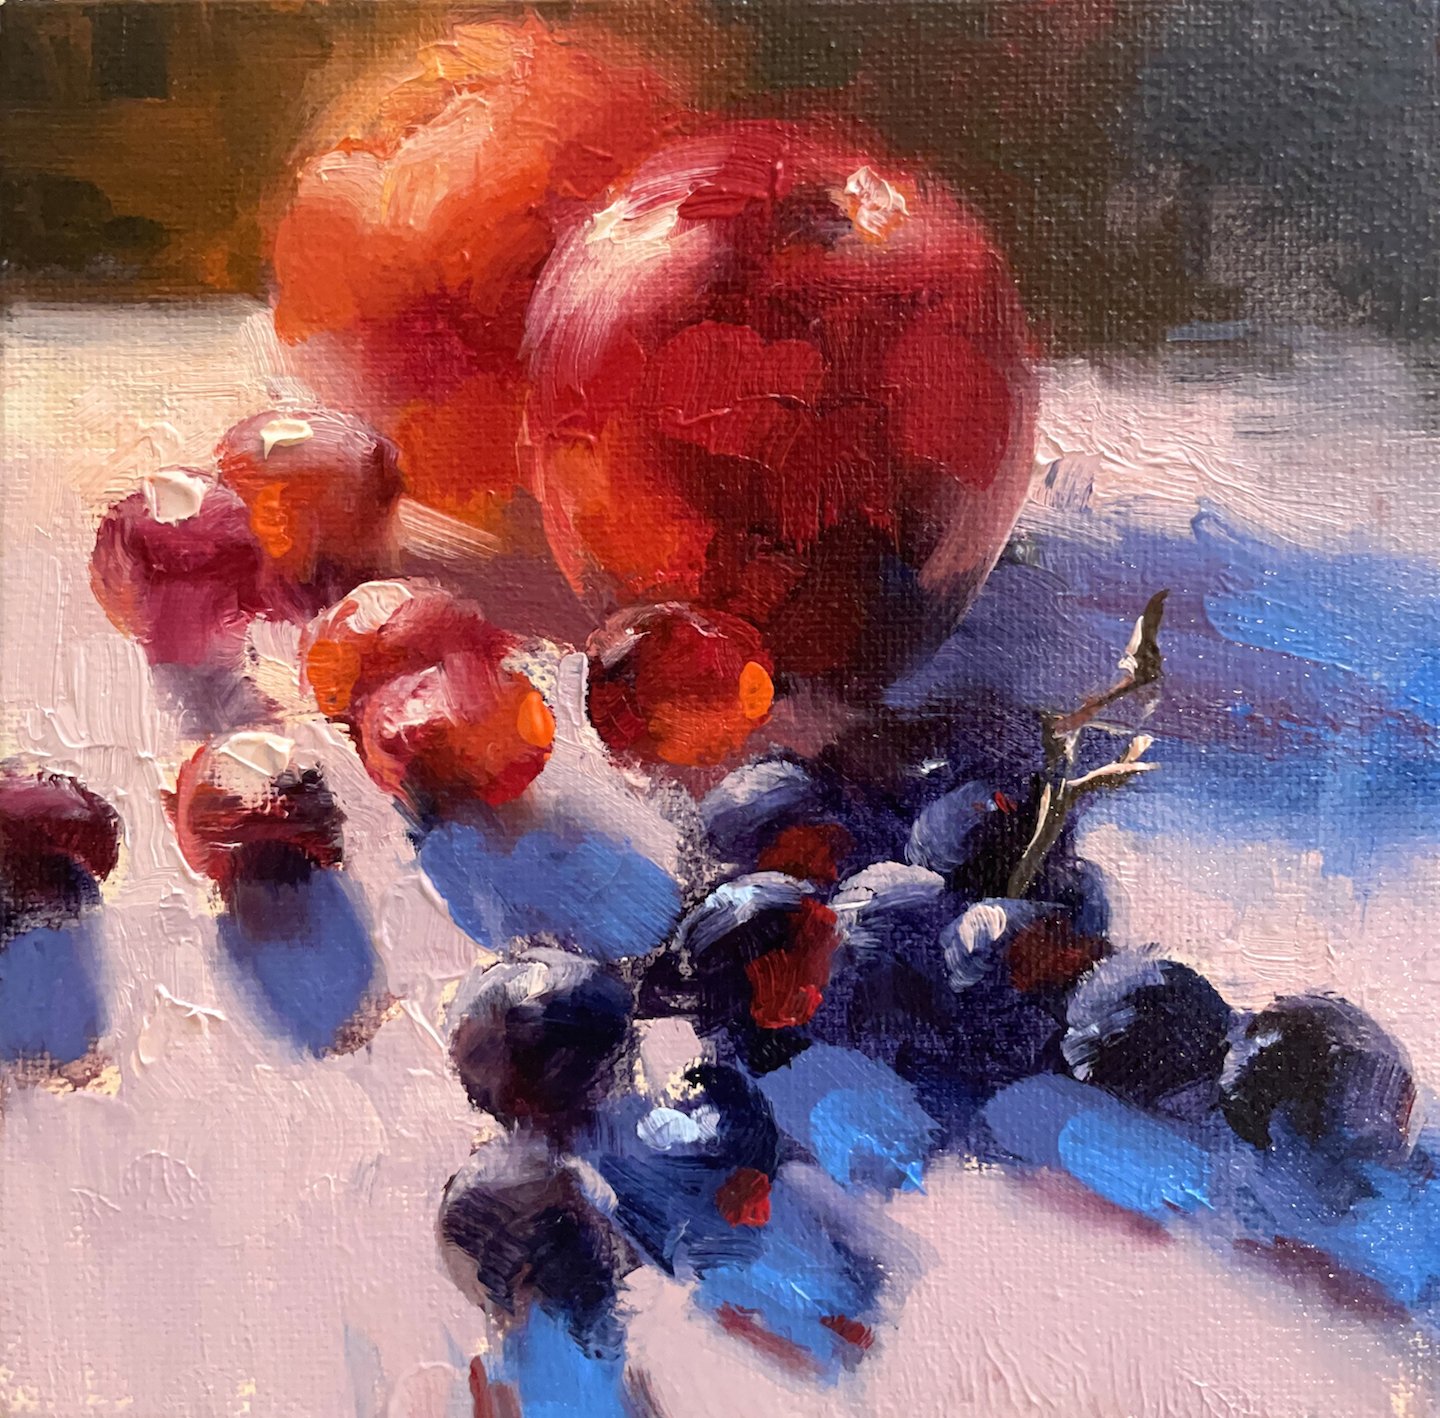 Backlit Apples 2 by Carol Tarzier